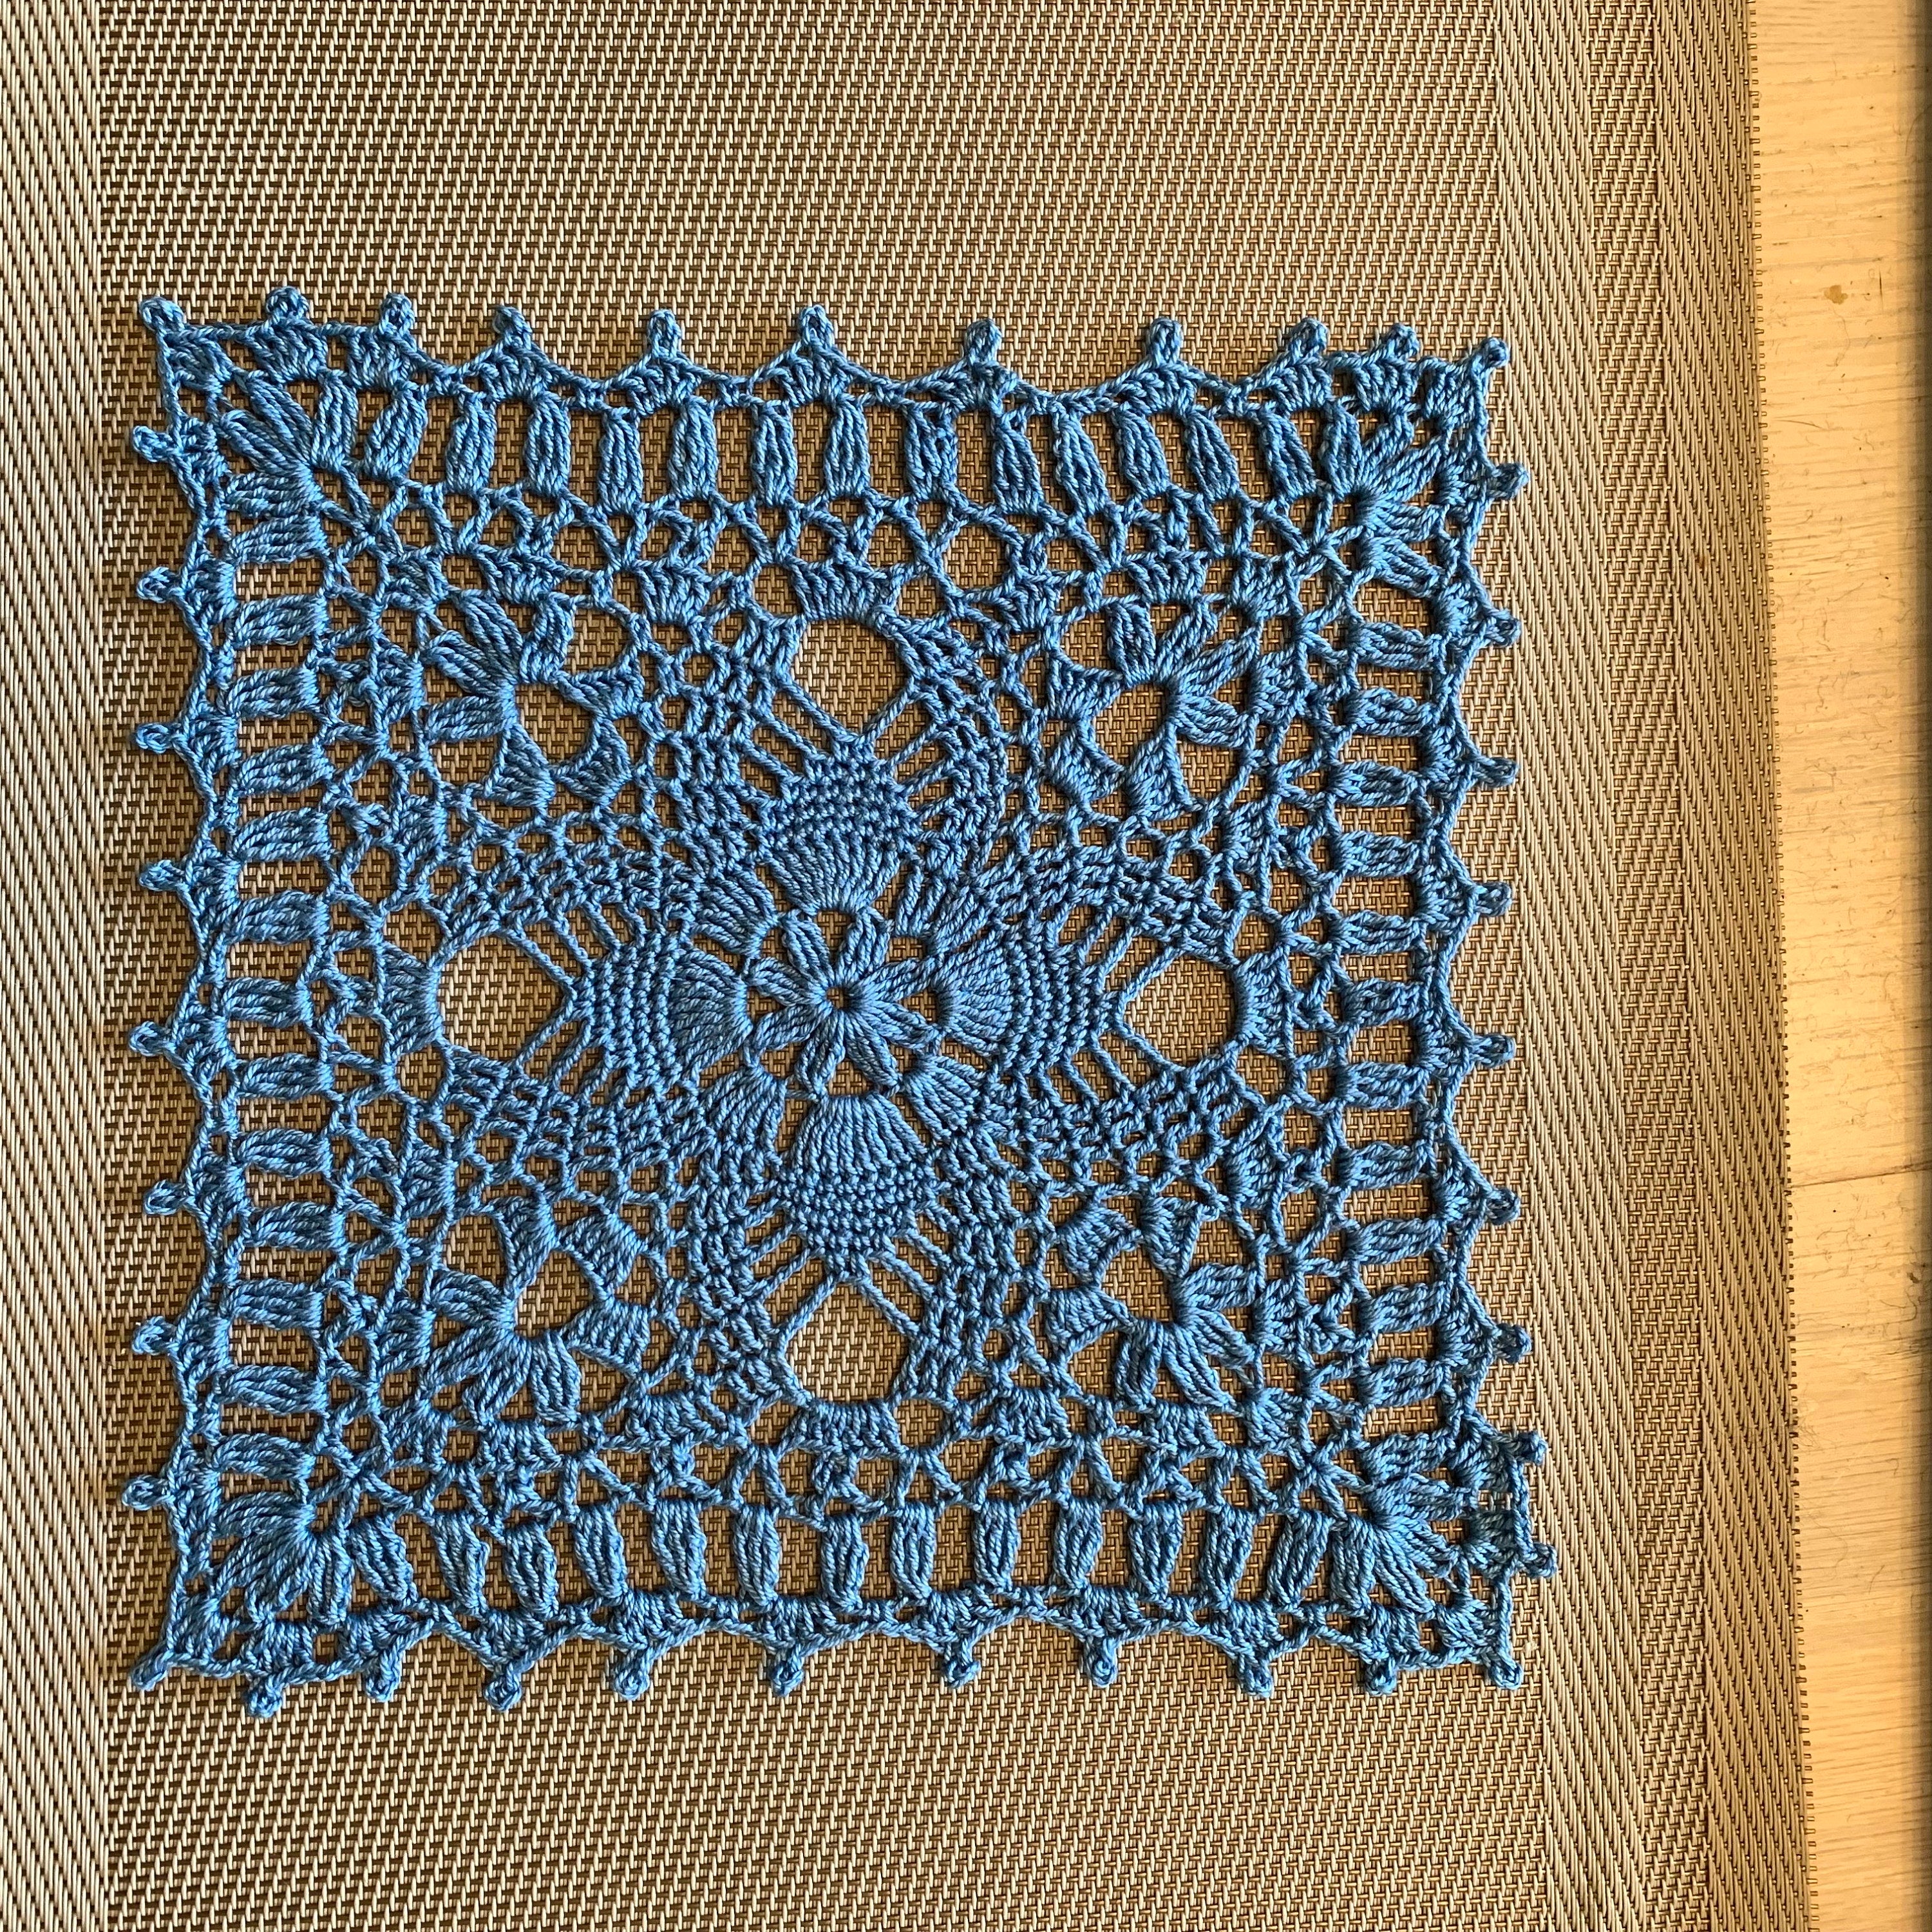 8” Square Doily- Country Blue Crochet Doily